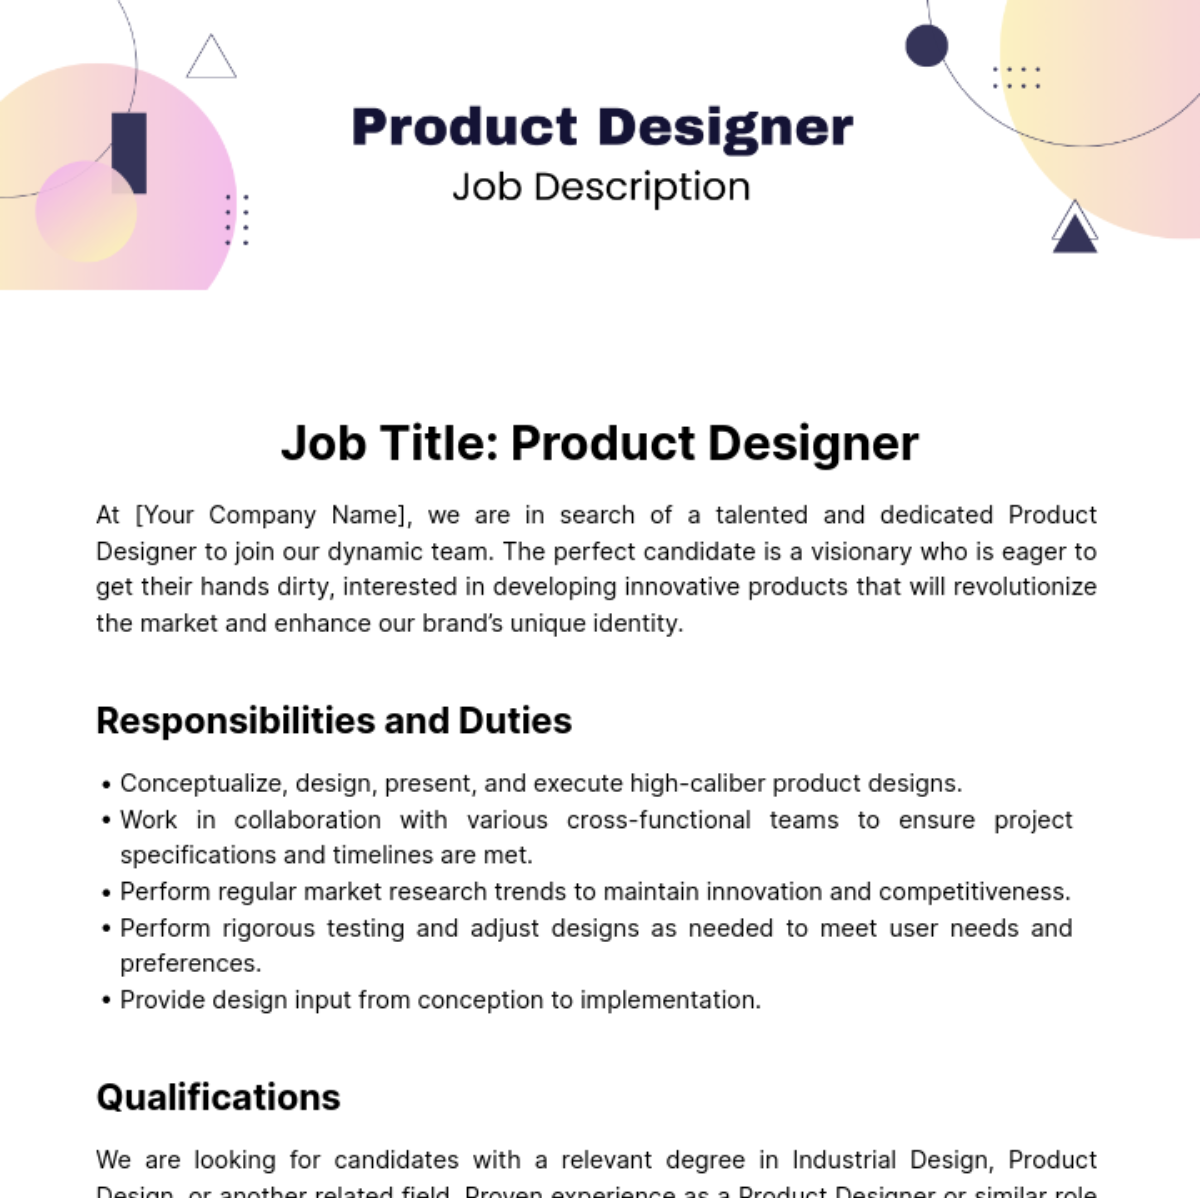 Product Designer Job Description Template